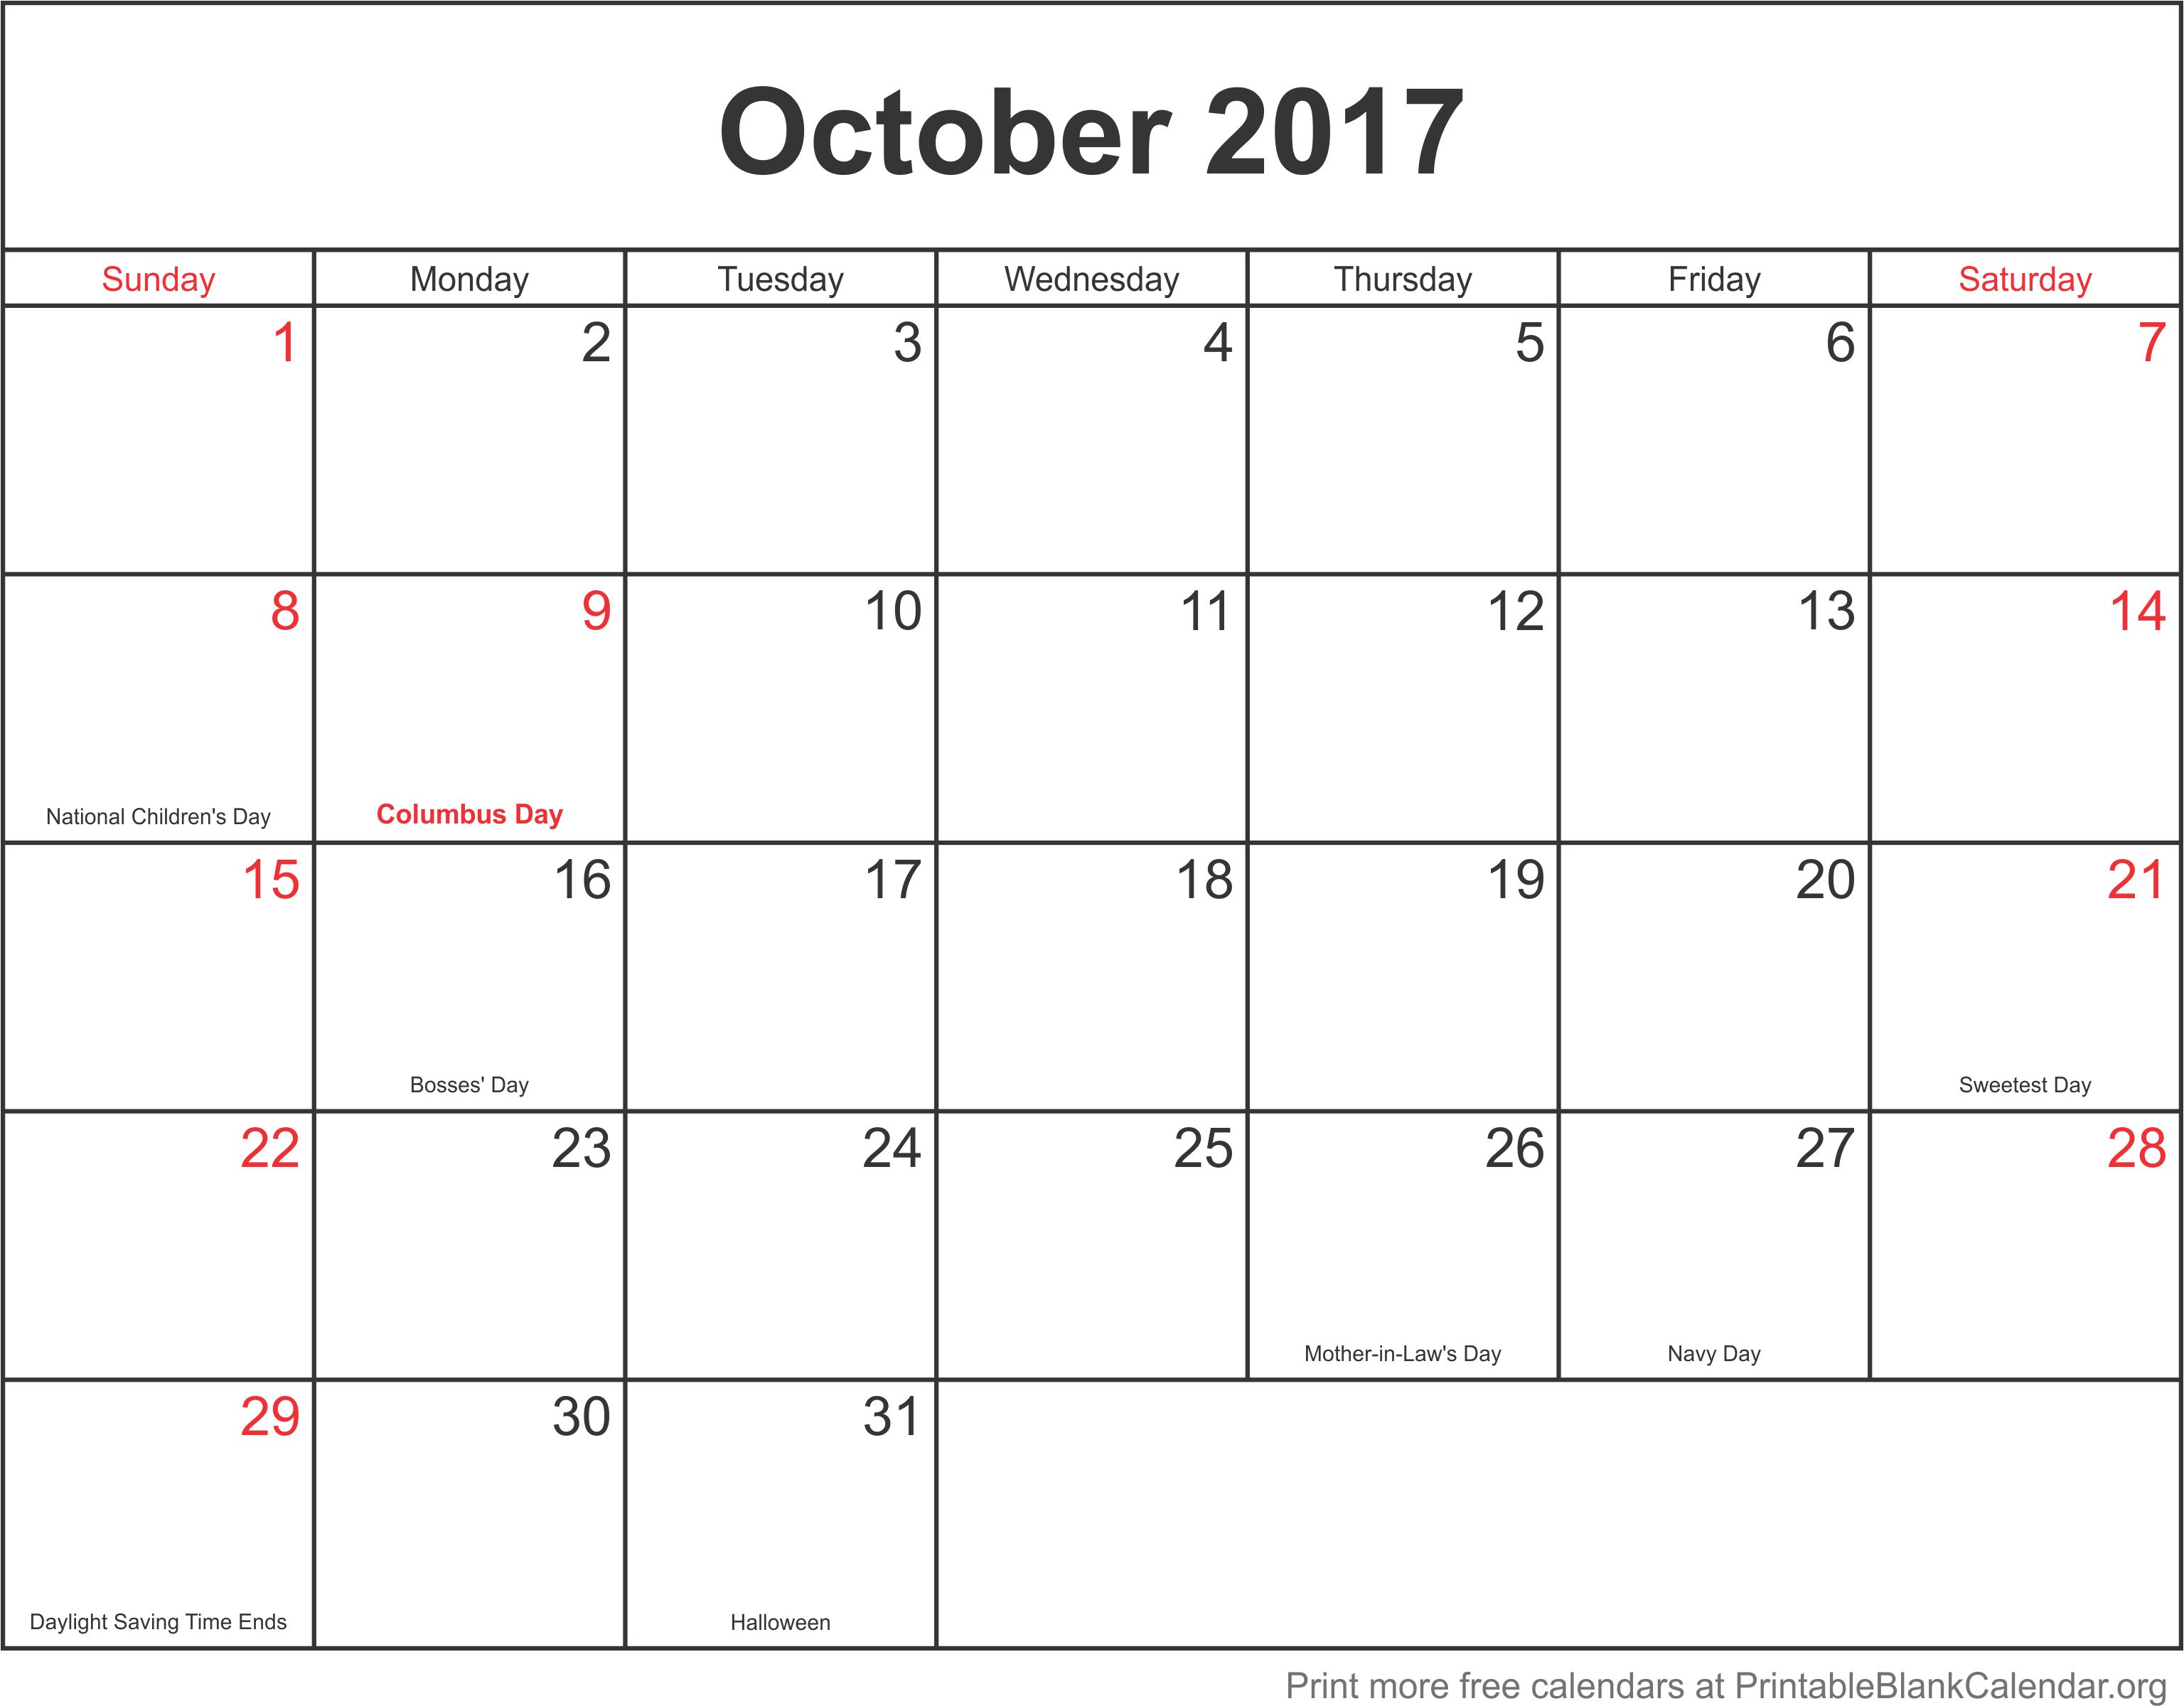 October 2017 Free Printable Calendar Printable Blank Calendar org